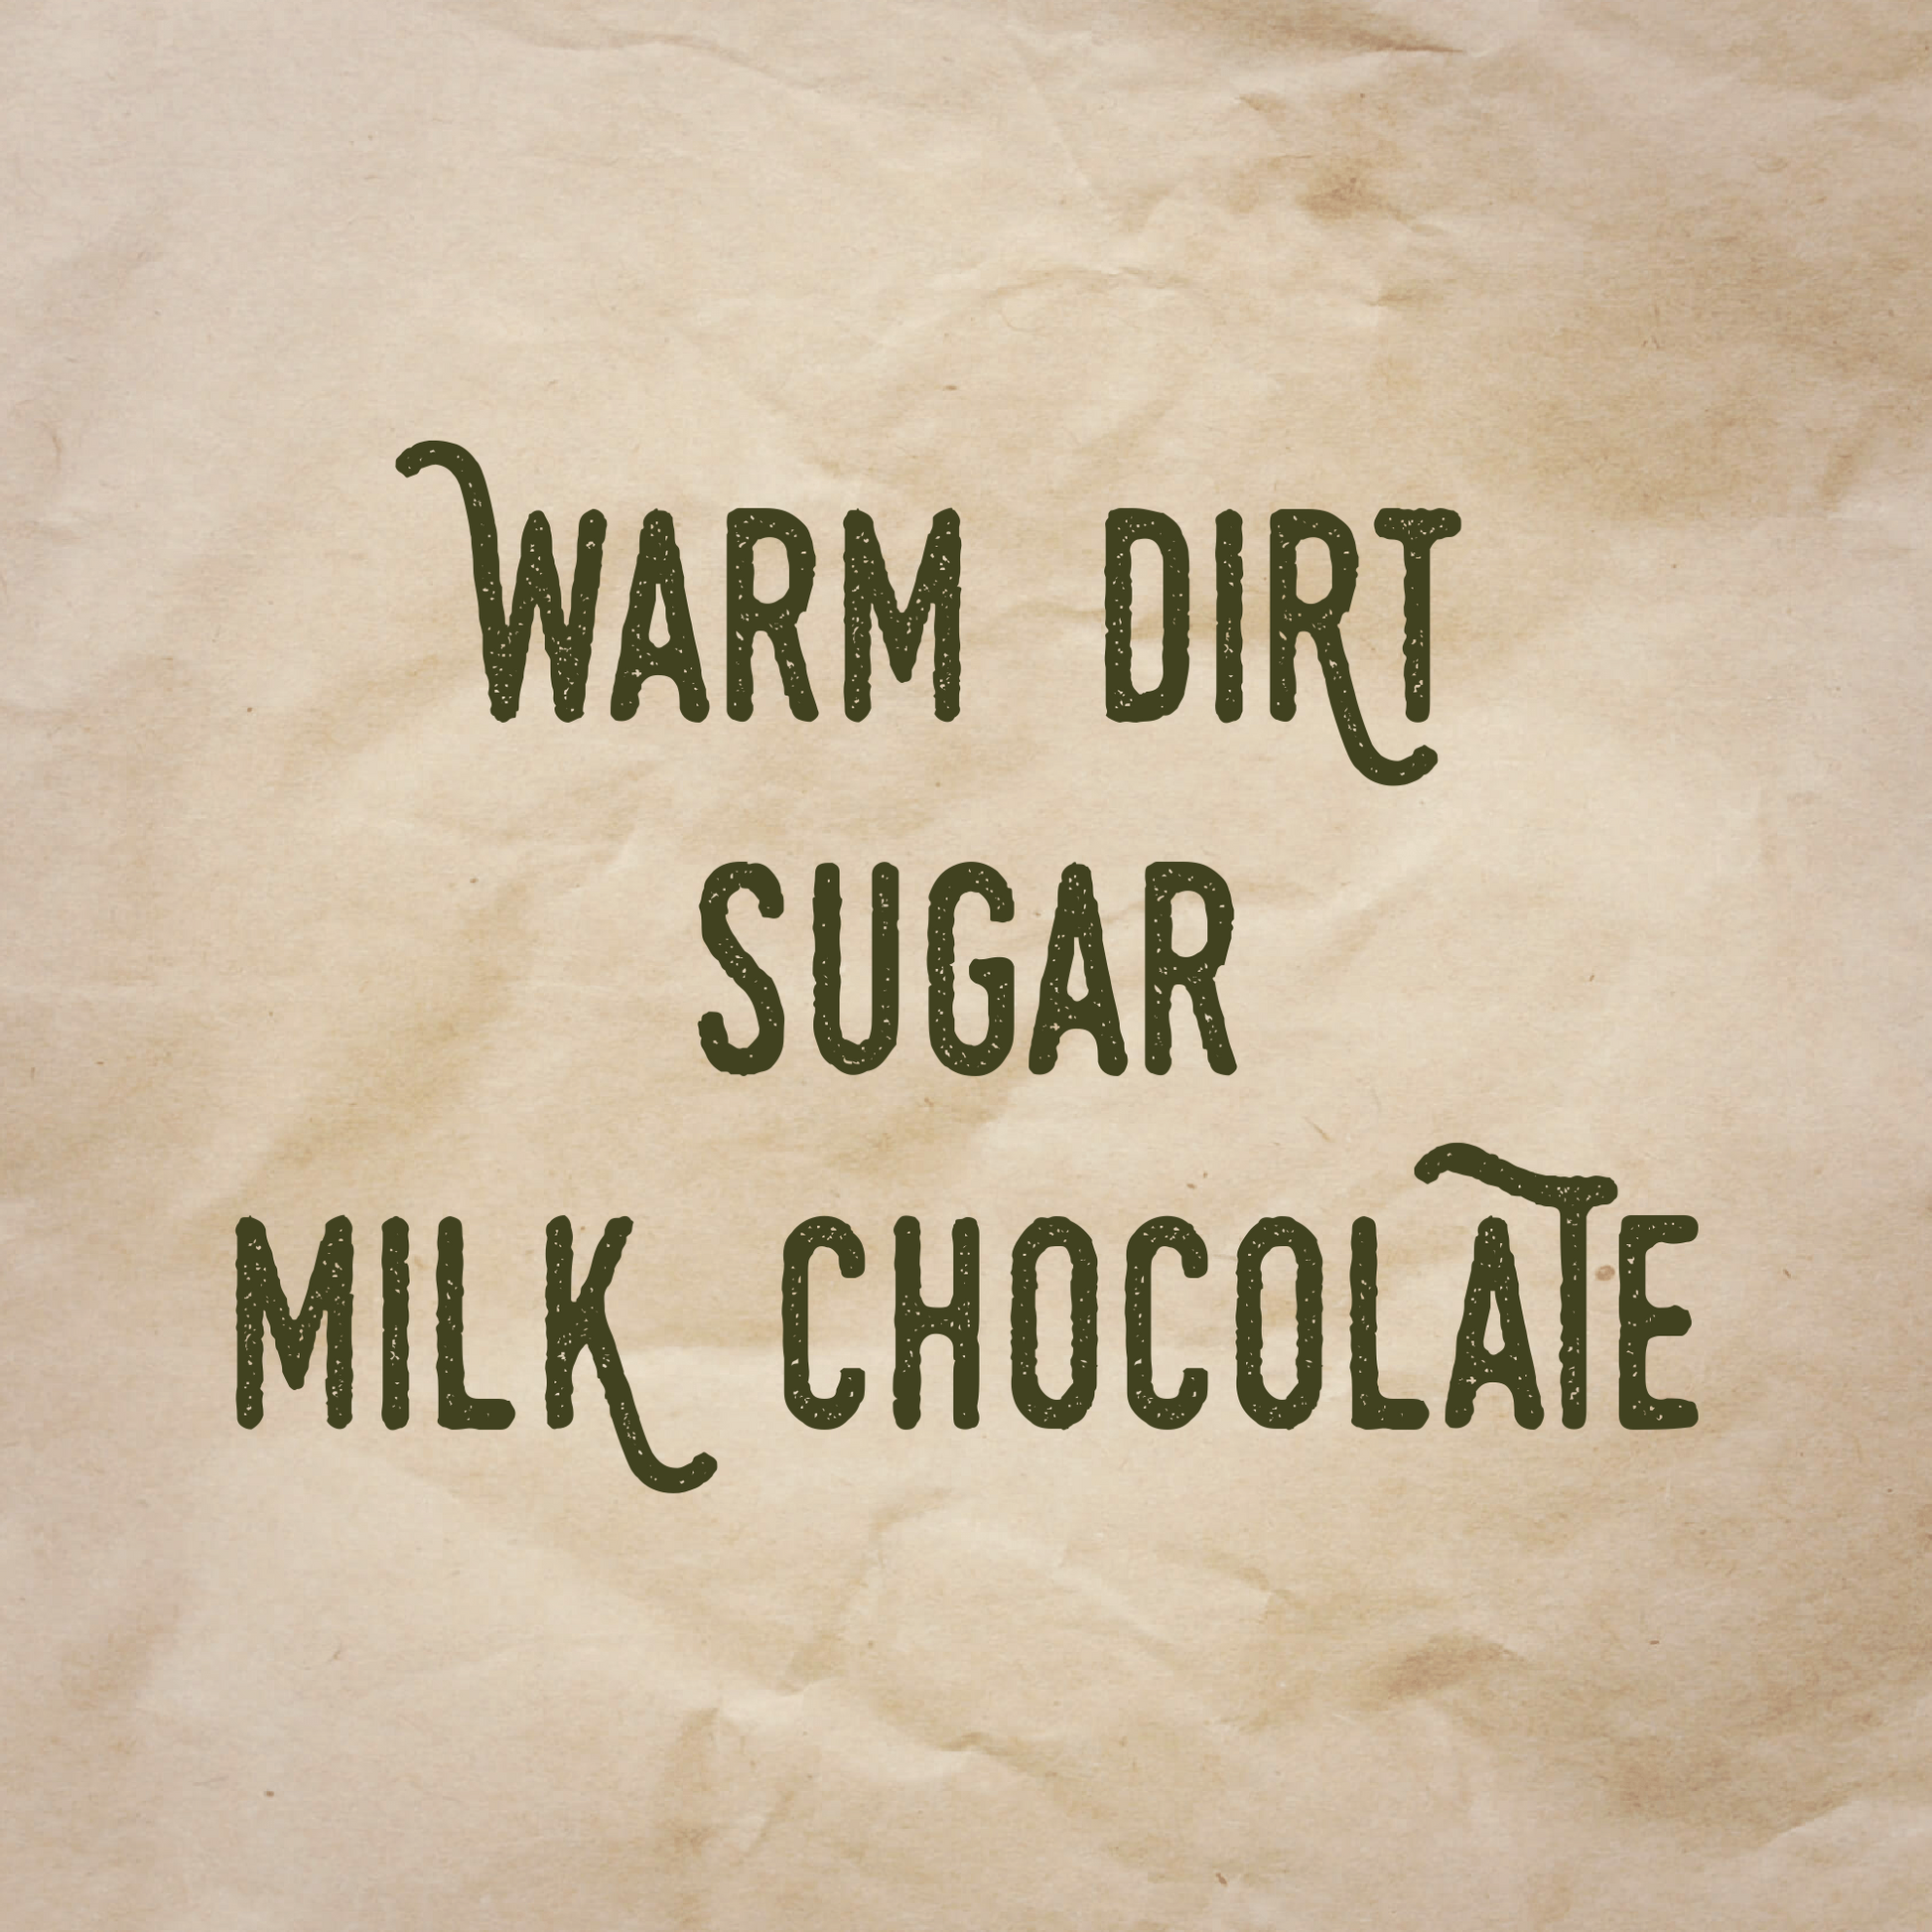 Dirt Nap scent notes: Warm dirt, sugar, milk chocolate.